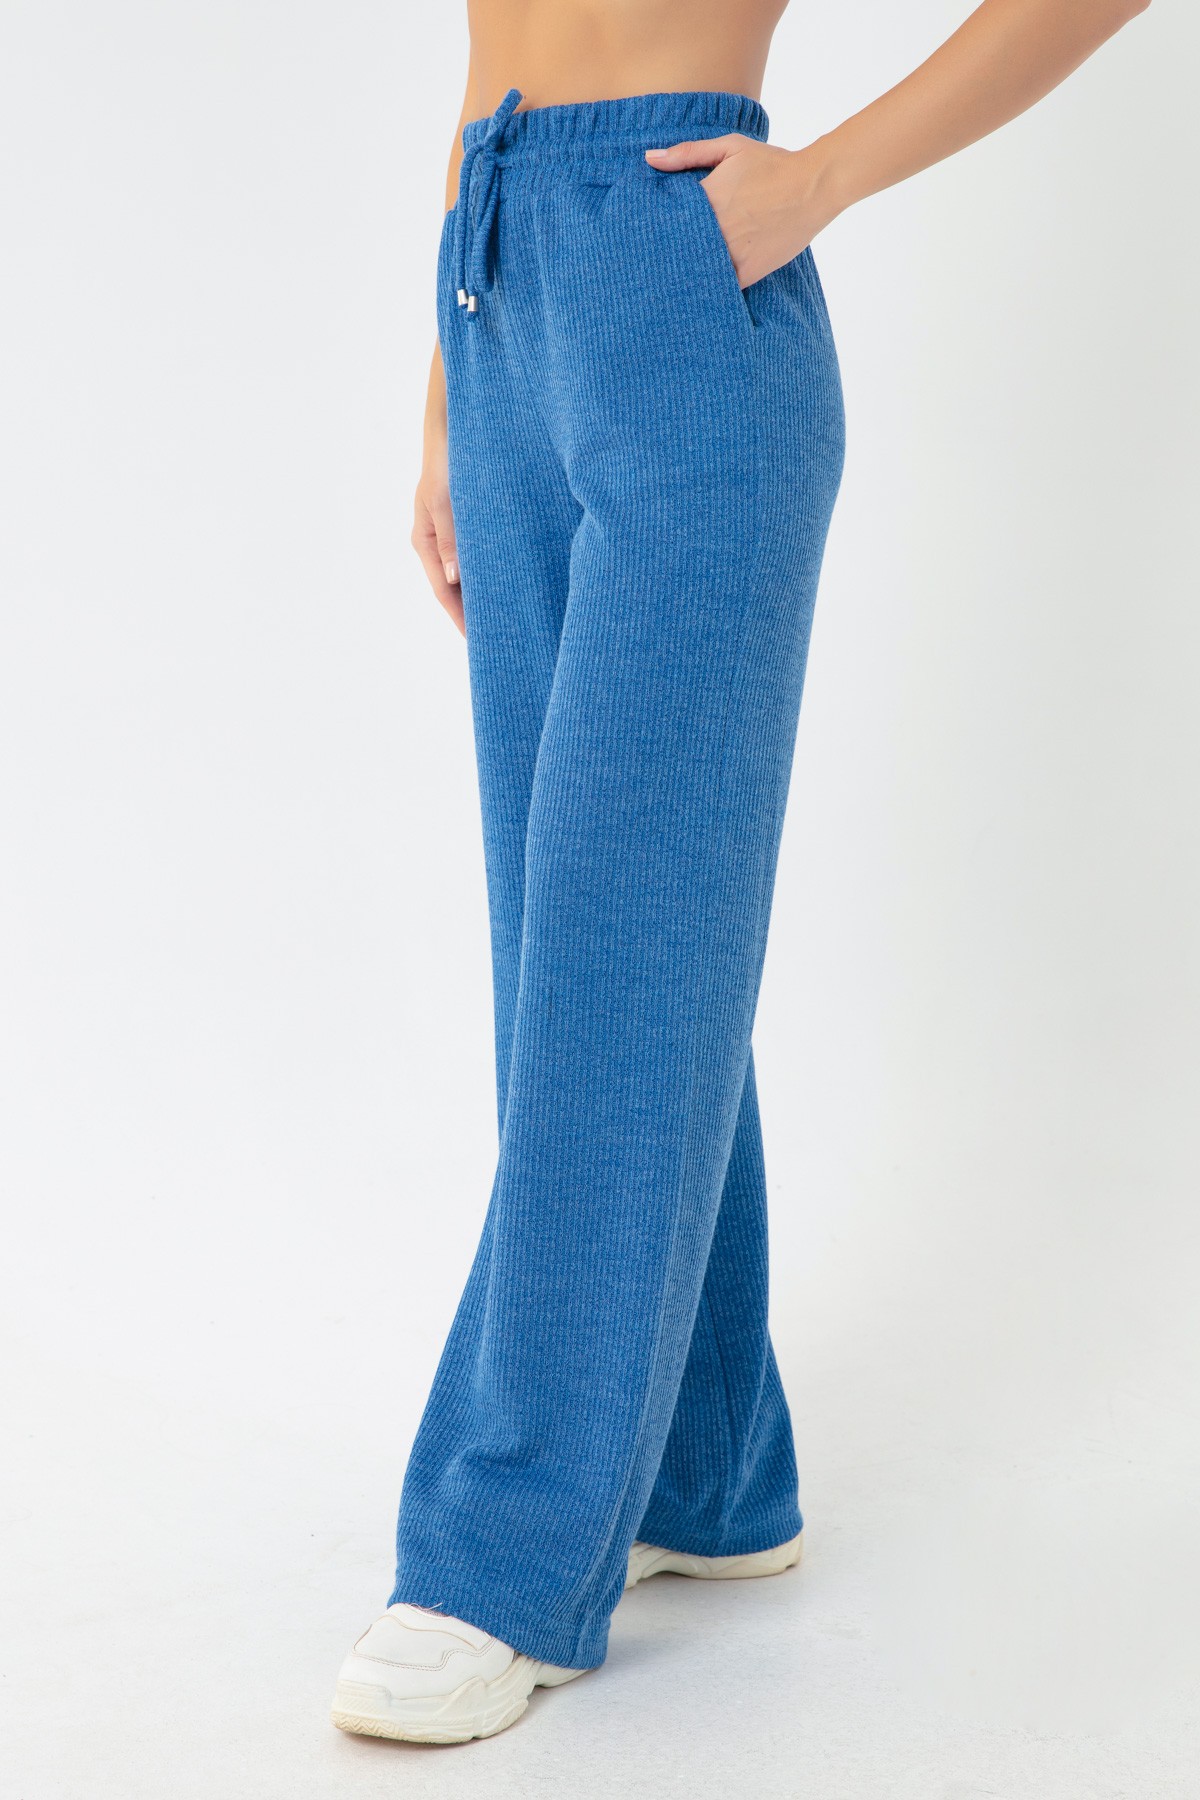 Kadın Beli Lastikli Örme Pantolon - Mavi